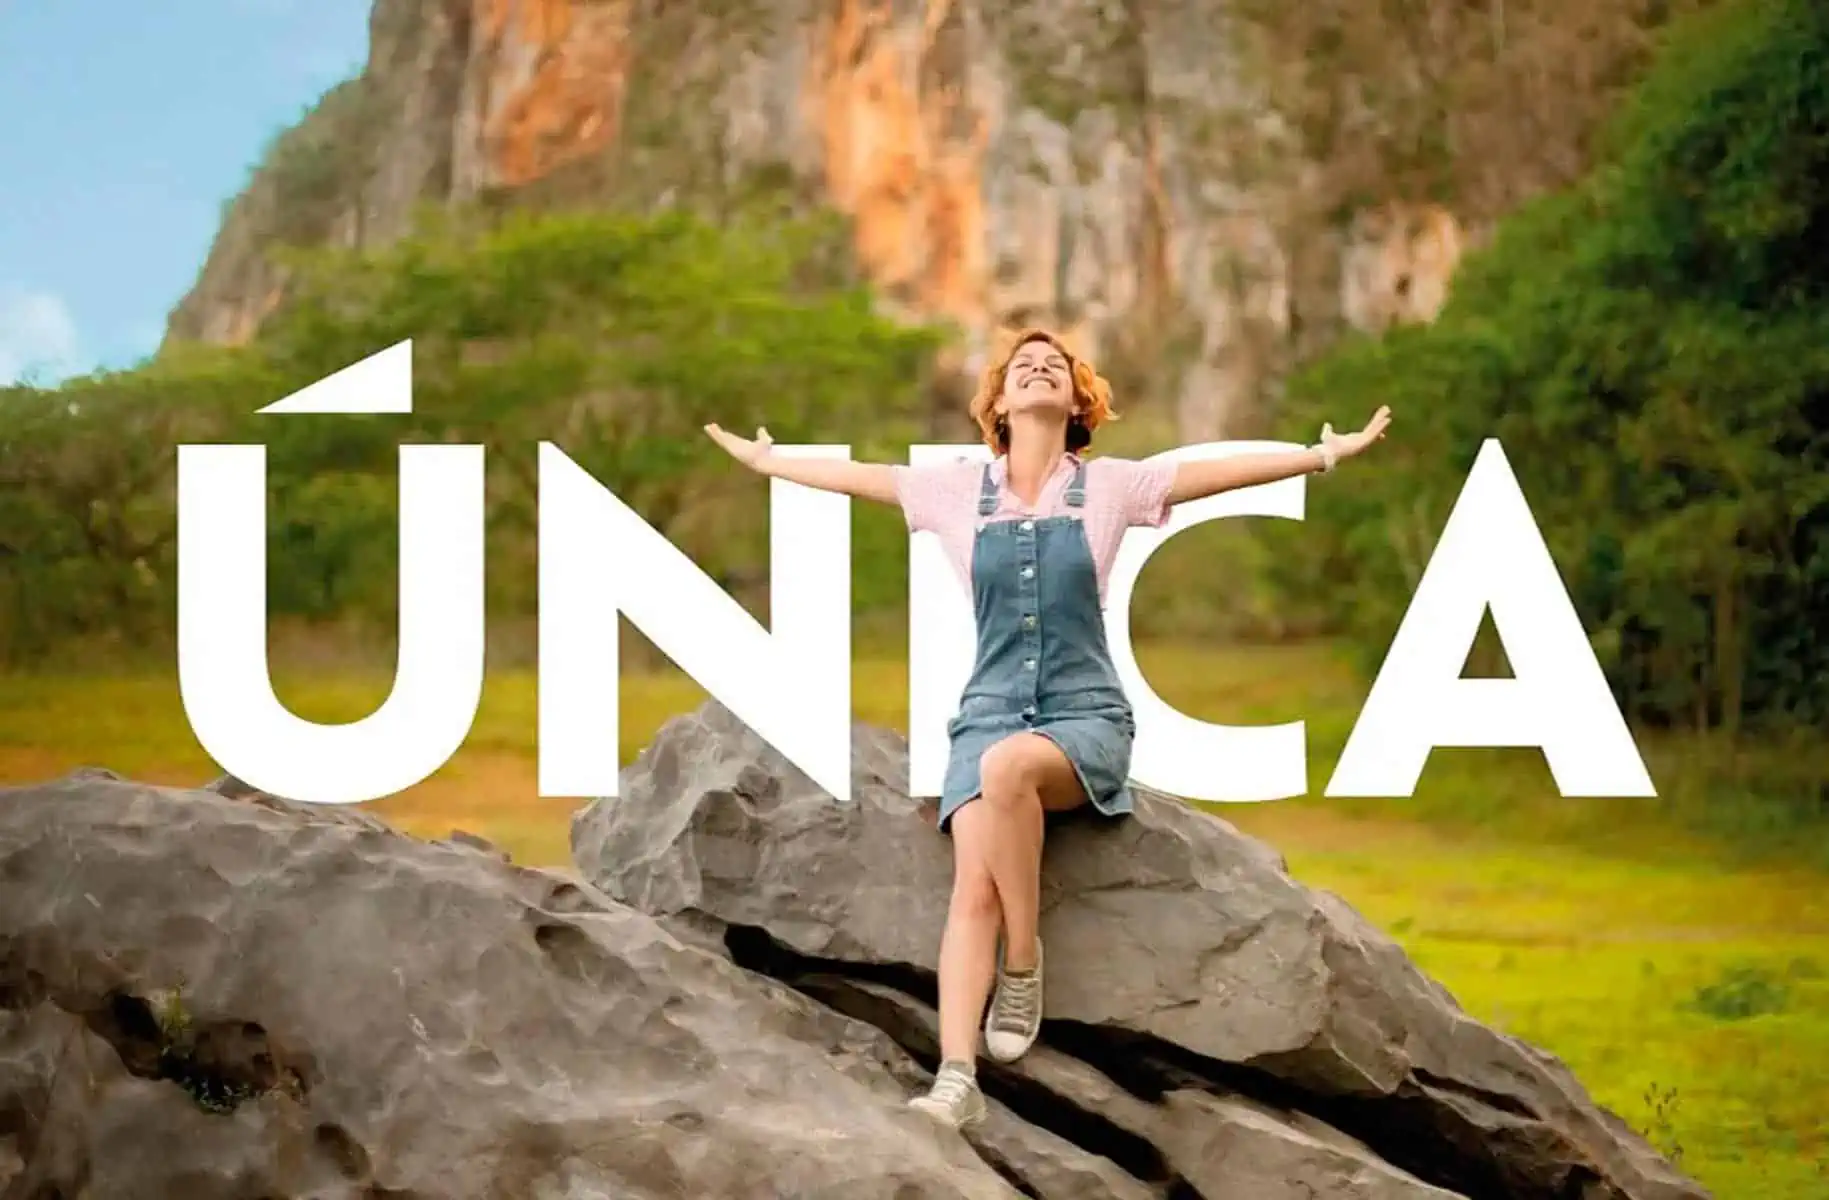 Video Promocional Cuba Unica Aspira a Premio de Popularidad en Cannes Corporate Media &amp TV